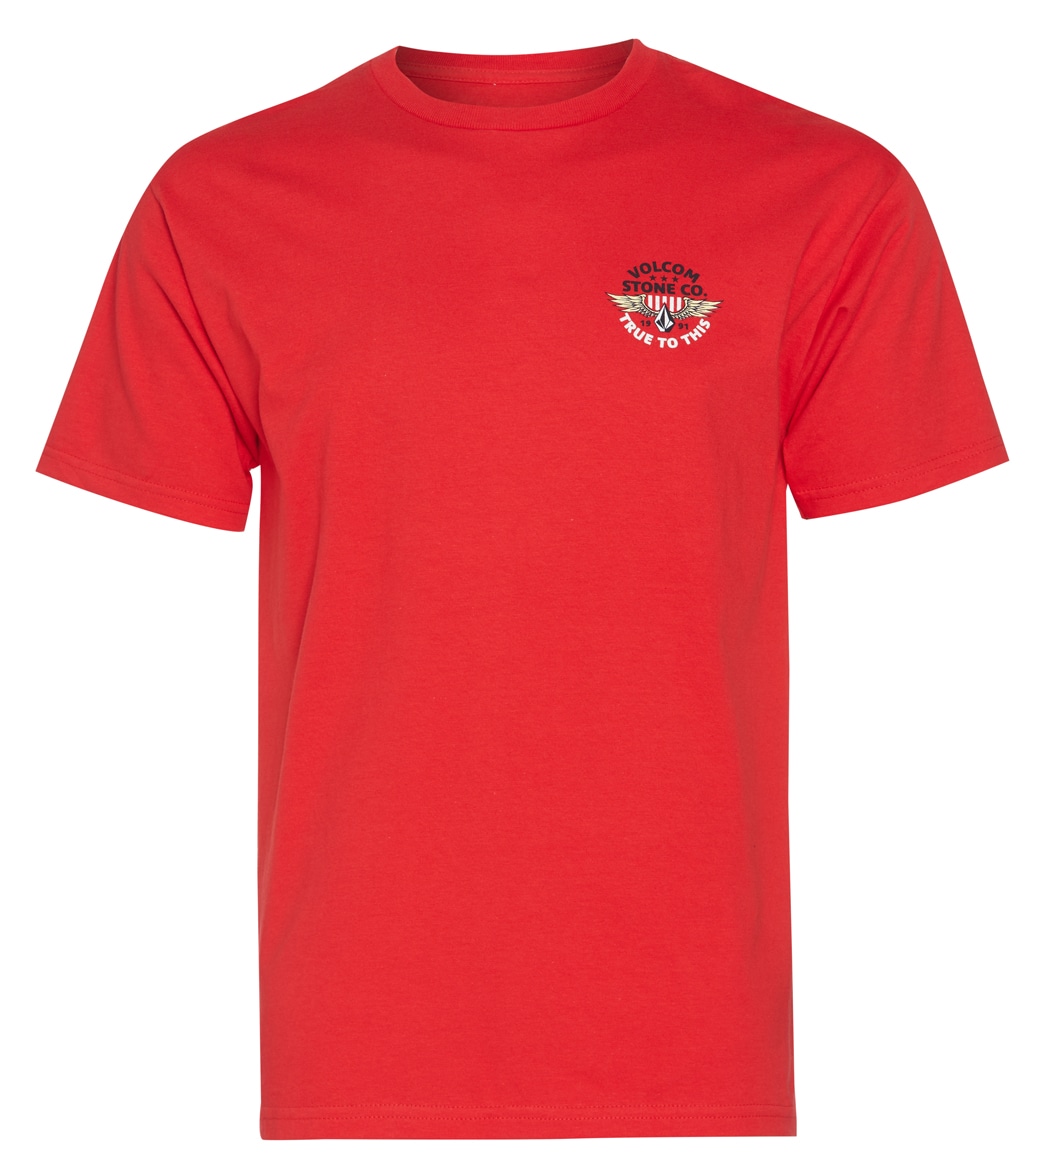 Volcom Men's Winged Beast Short Sleeve Tee Shirt - Ribbon Red Large Cotton - Swimoutlet.com